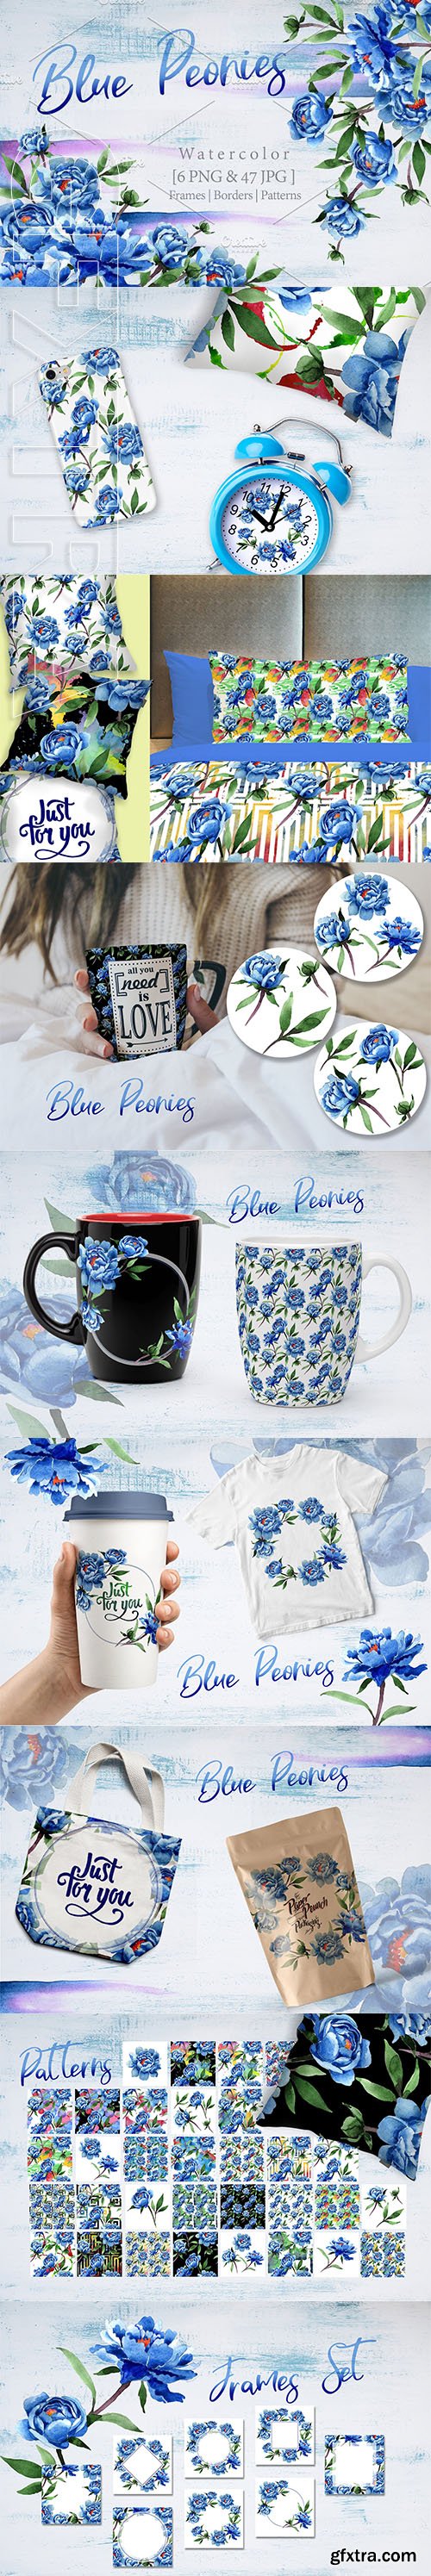 CreativeMarket - Cool blue Peonies PNG watercolor flower set 2891465